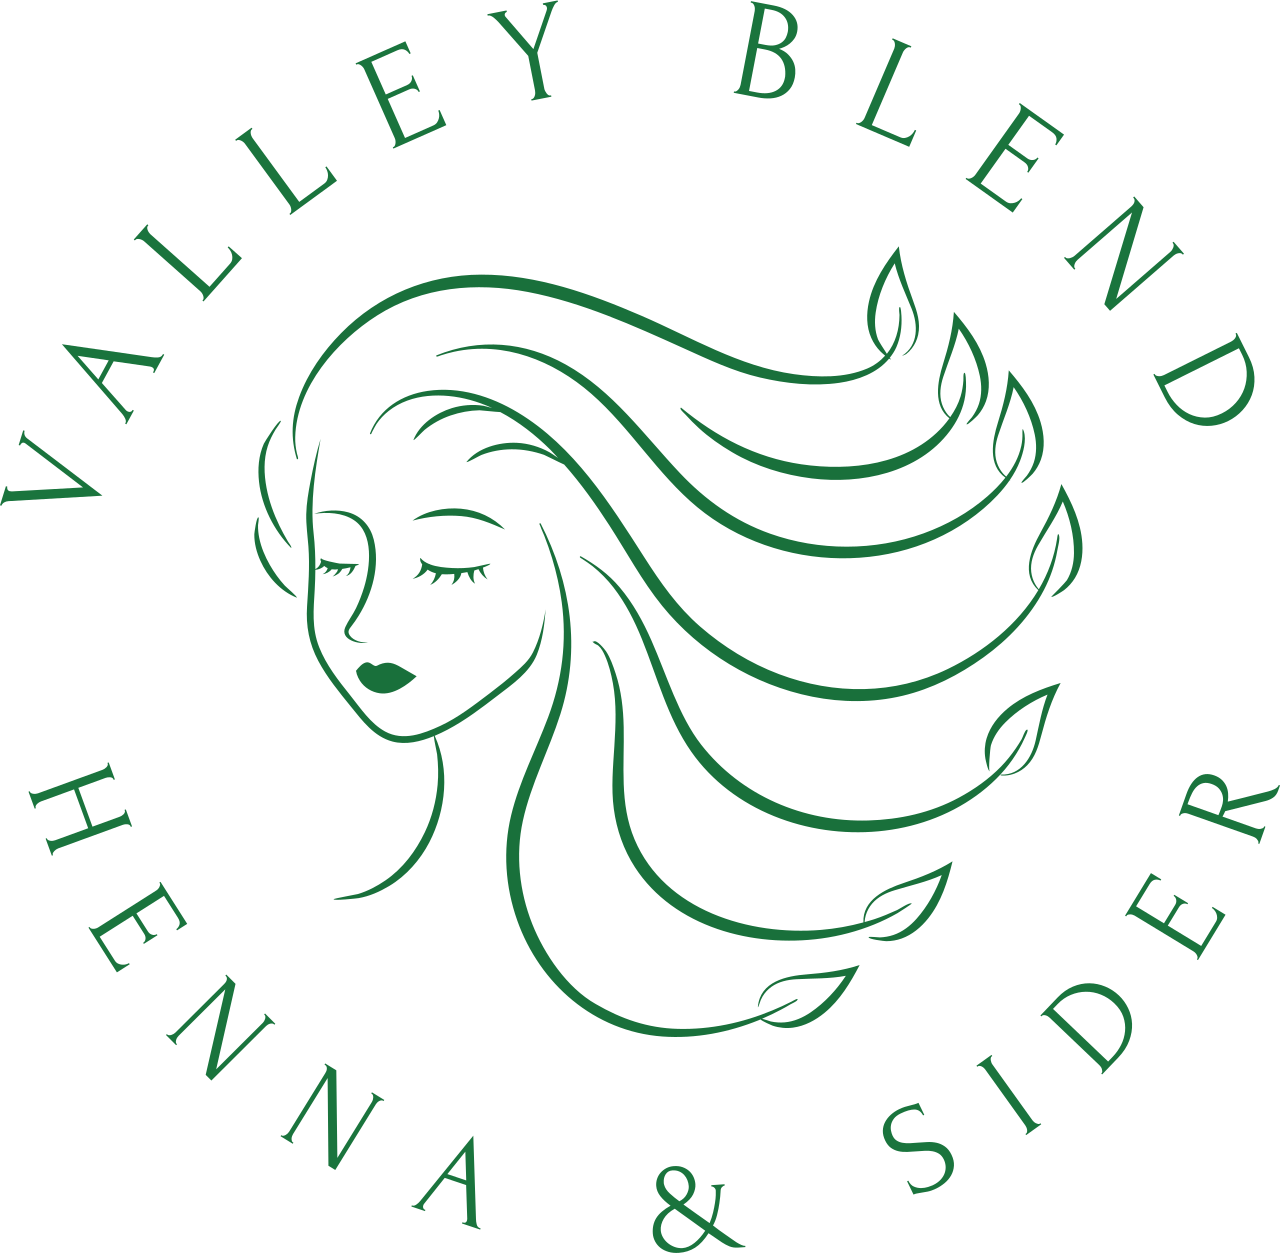 VALLEY BLEND 's logo